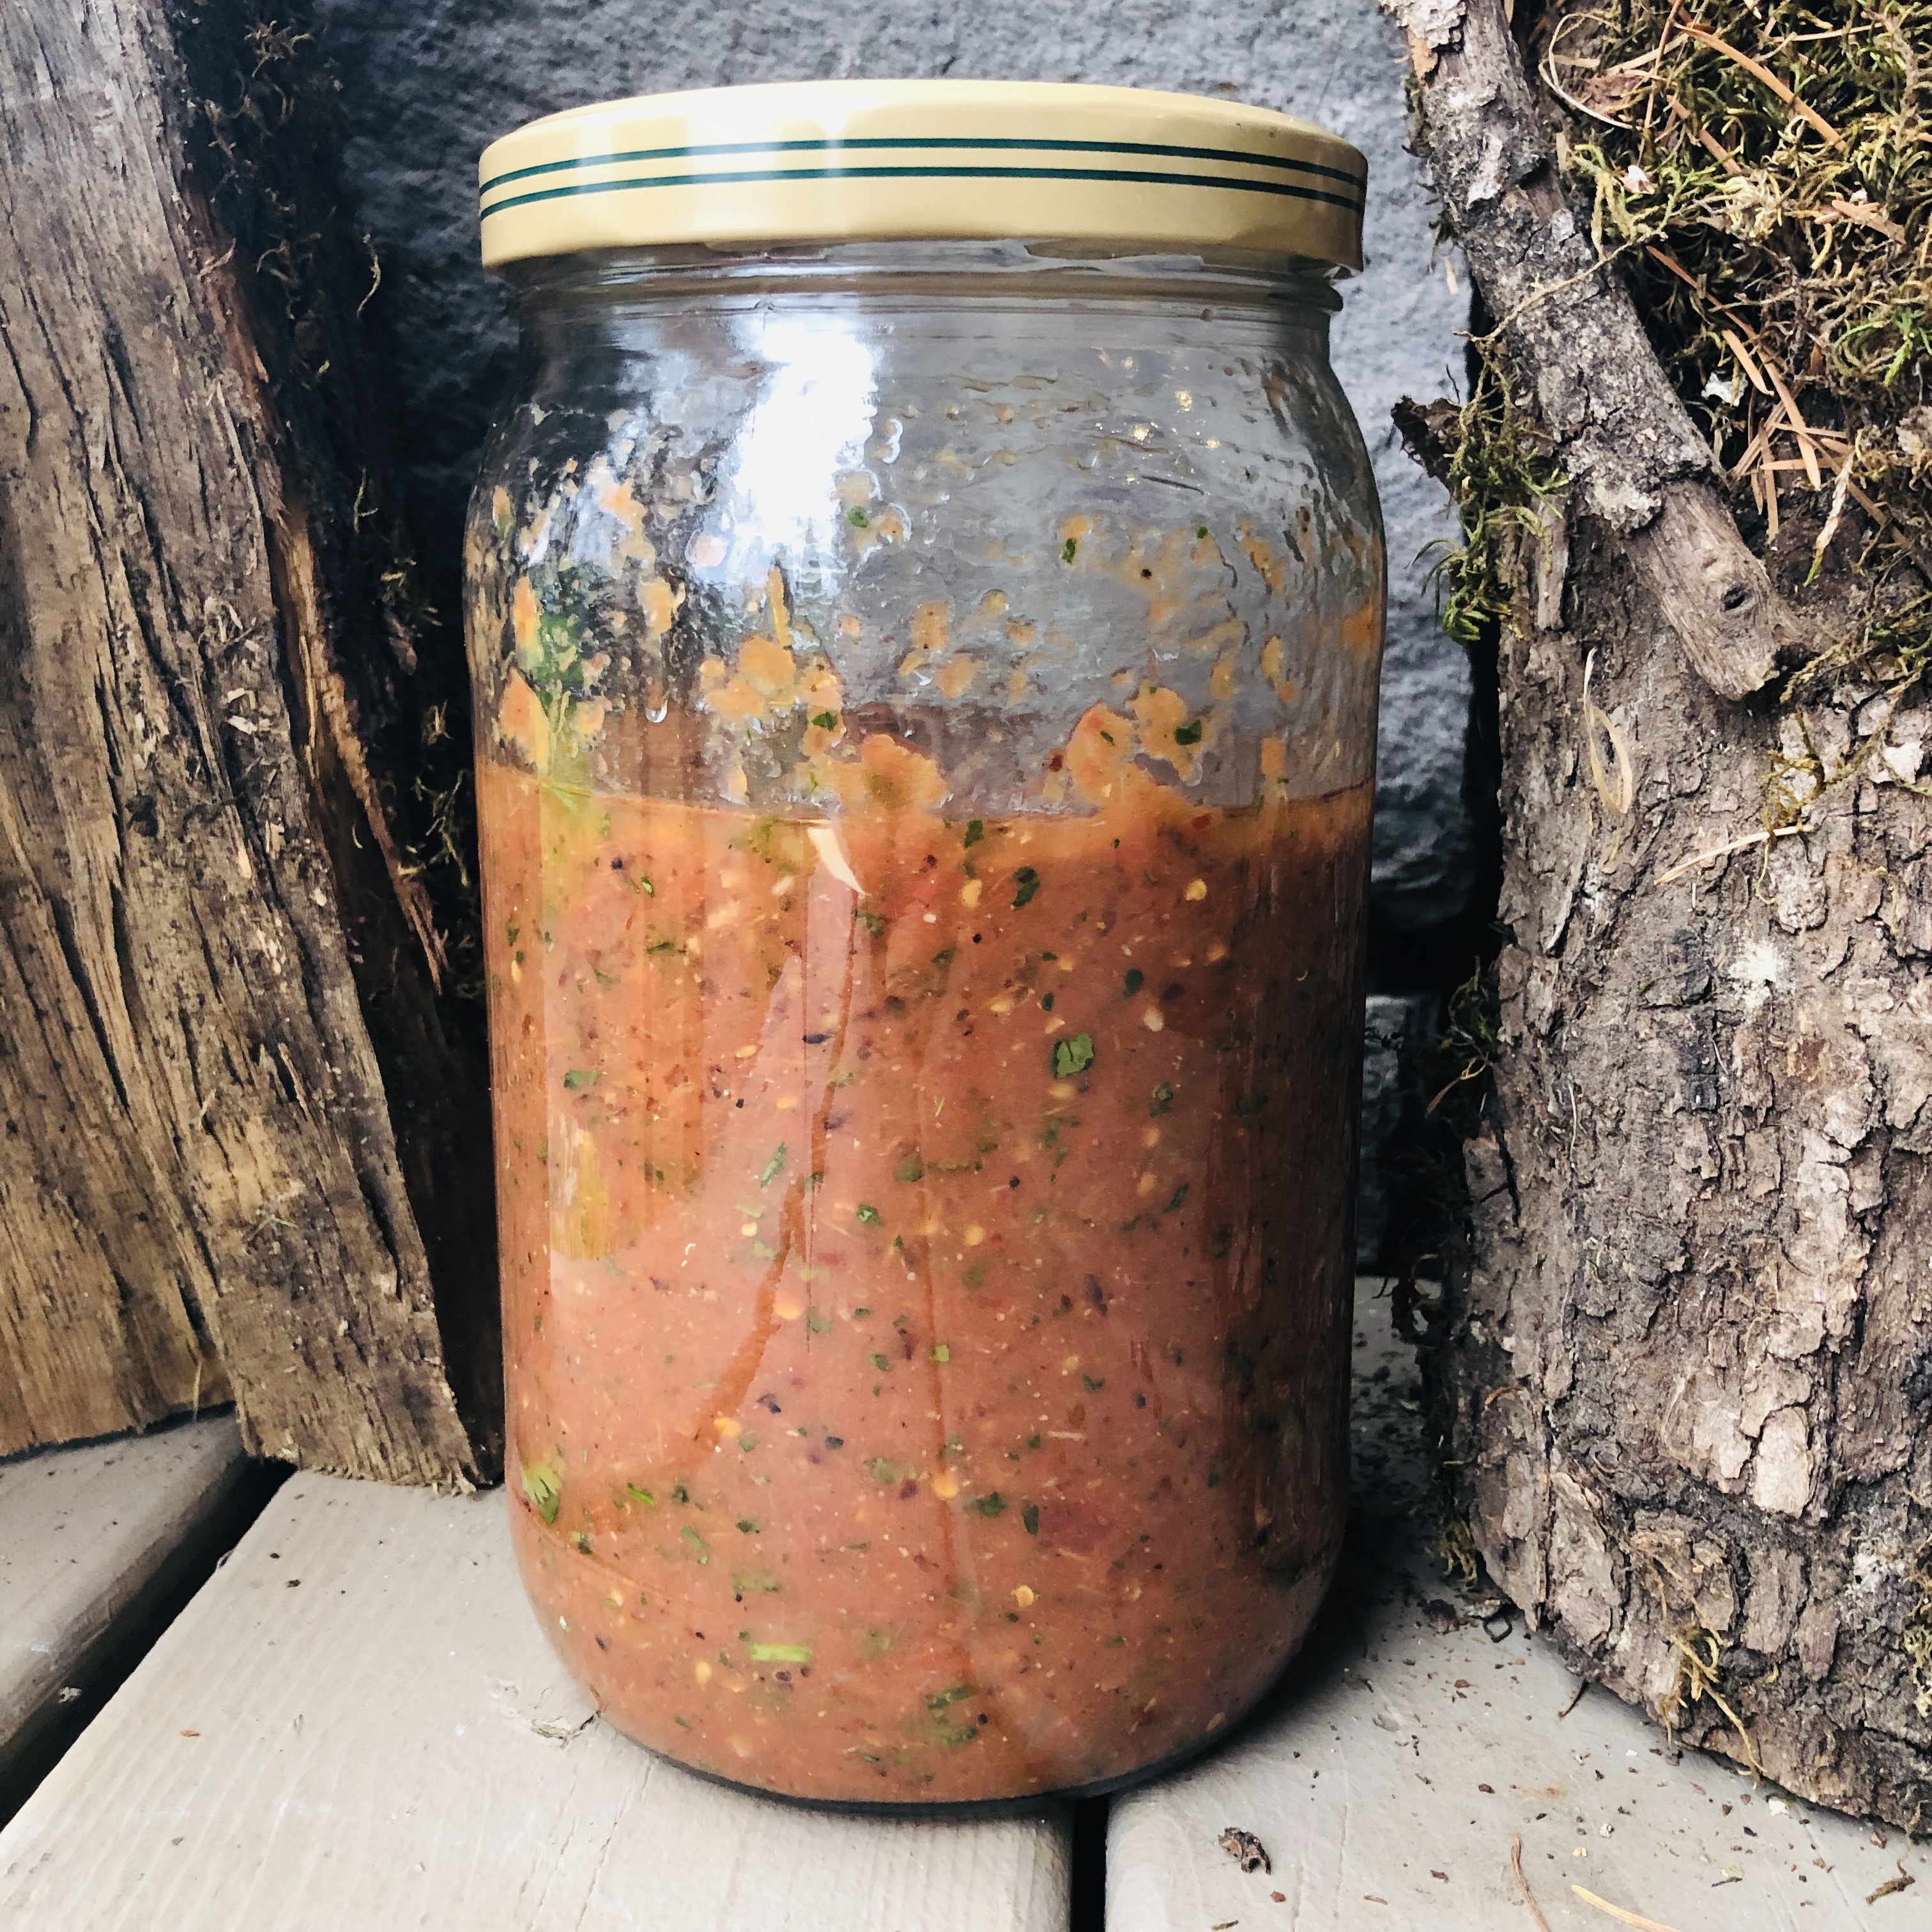 Fermented Roasted Tomato Salsa (vegan, paleo, keto)